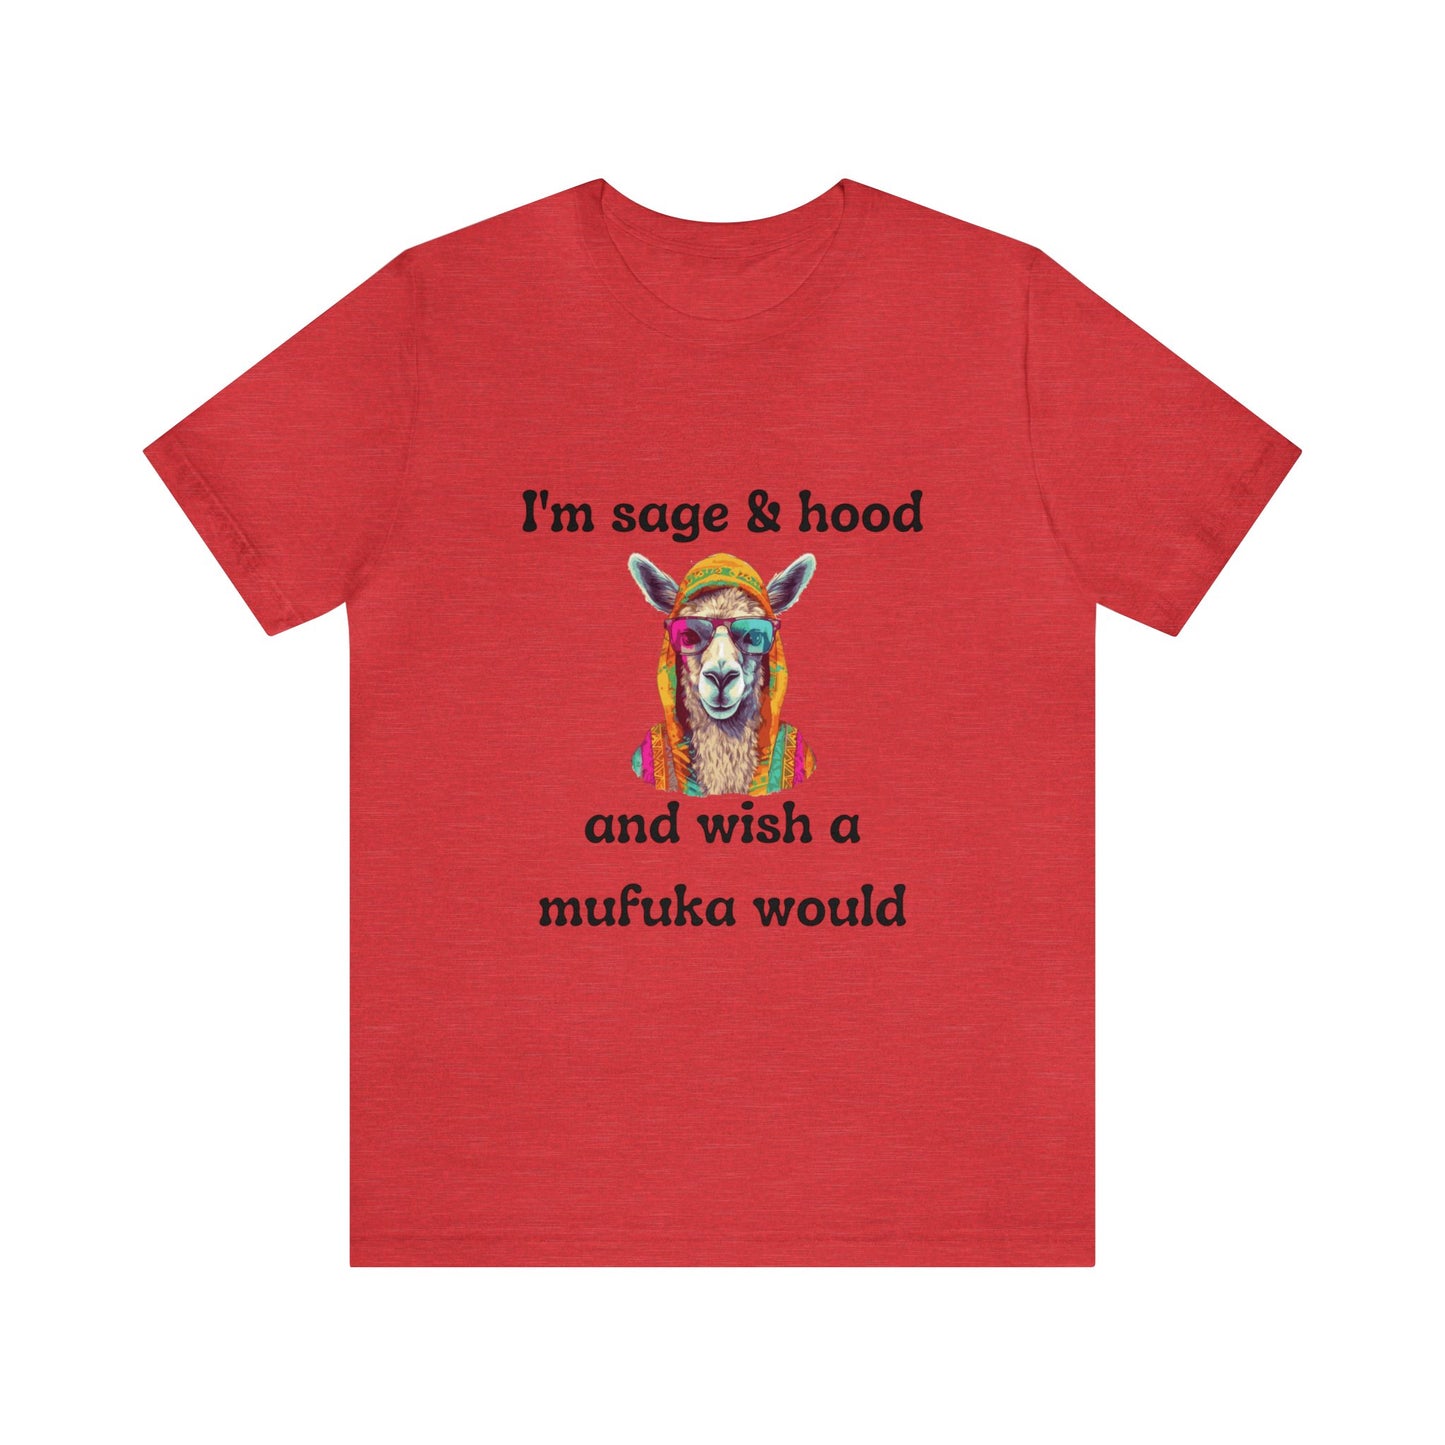 I'm Sage and Hood T-Shirt, Wish a mufuka would shirt